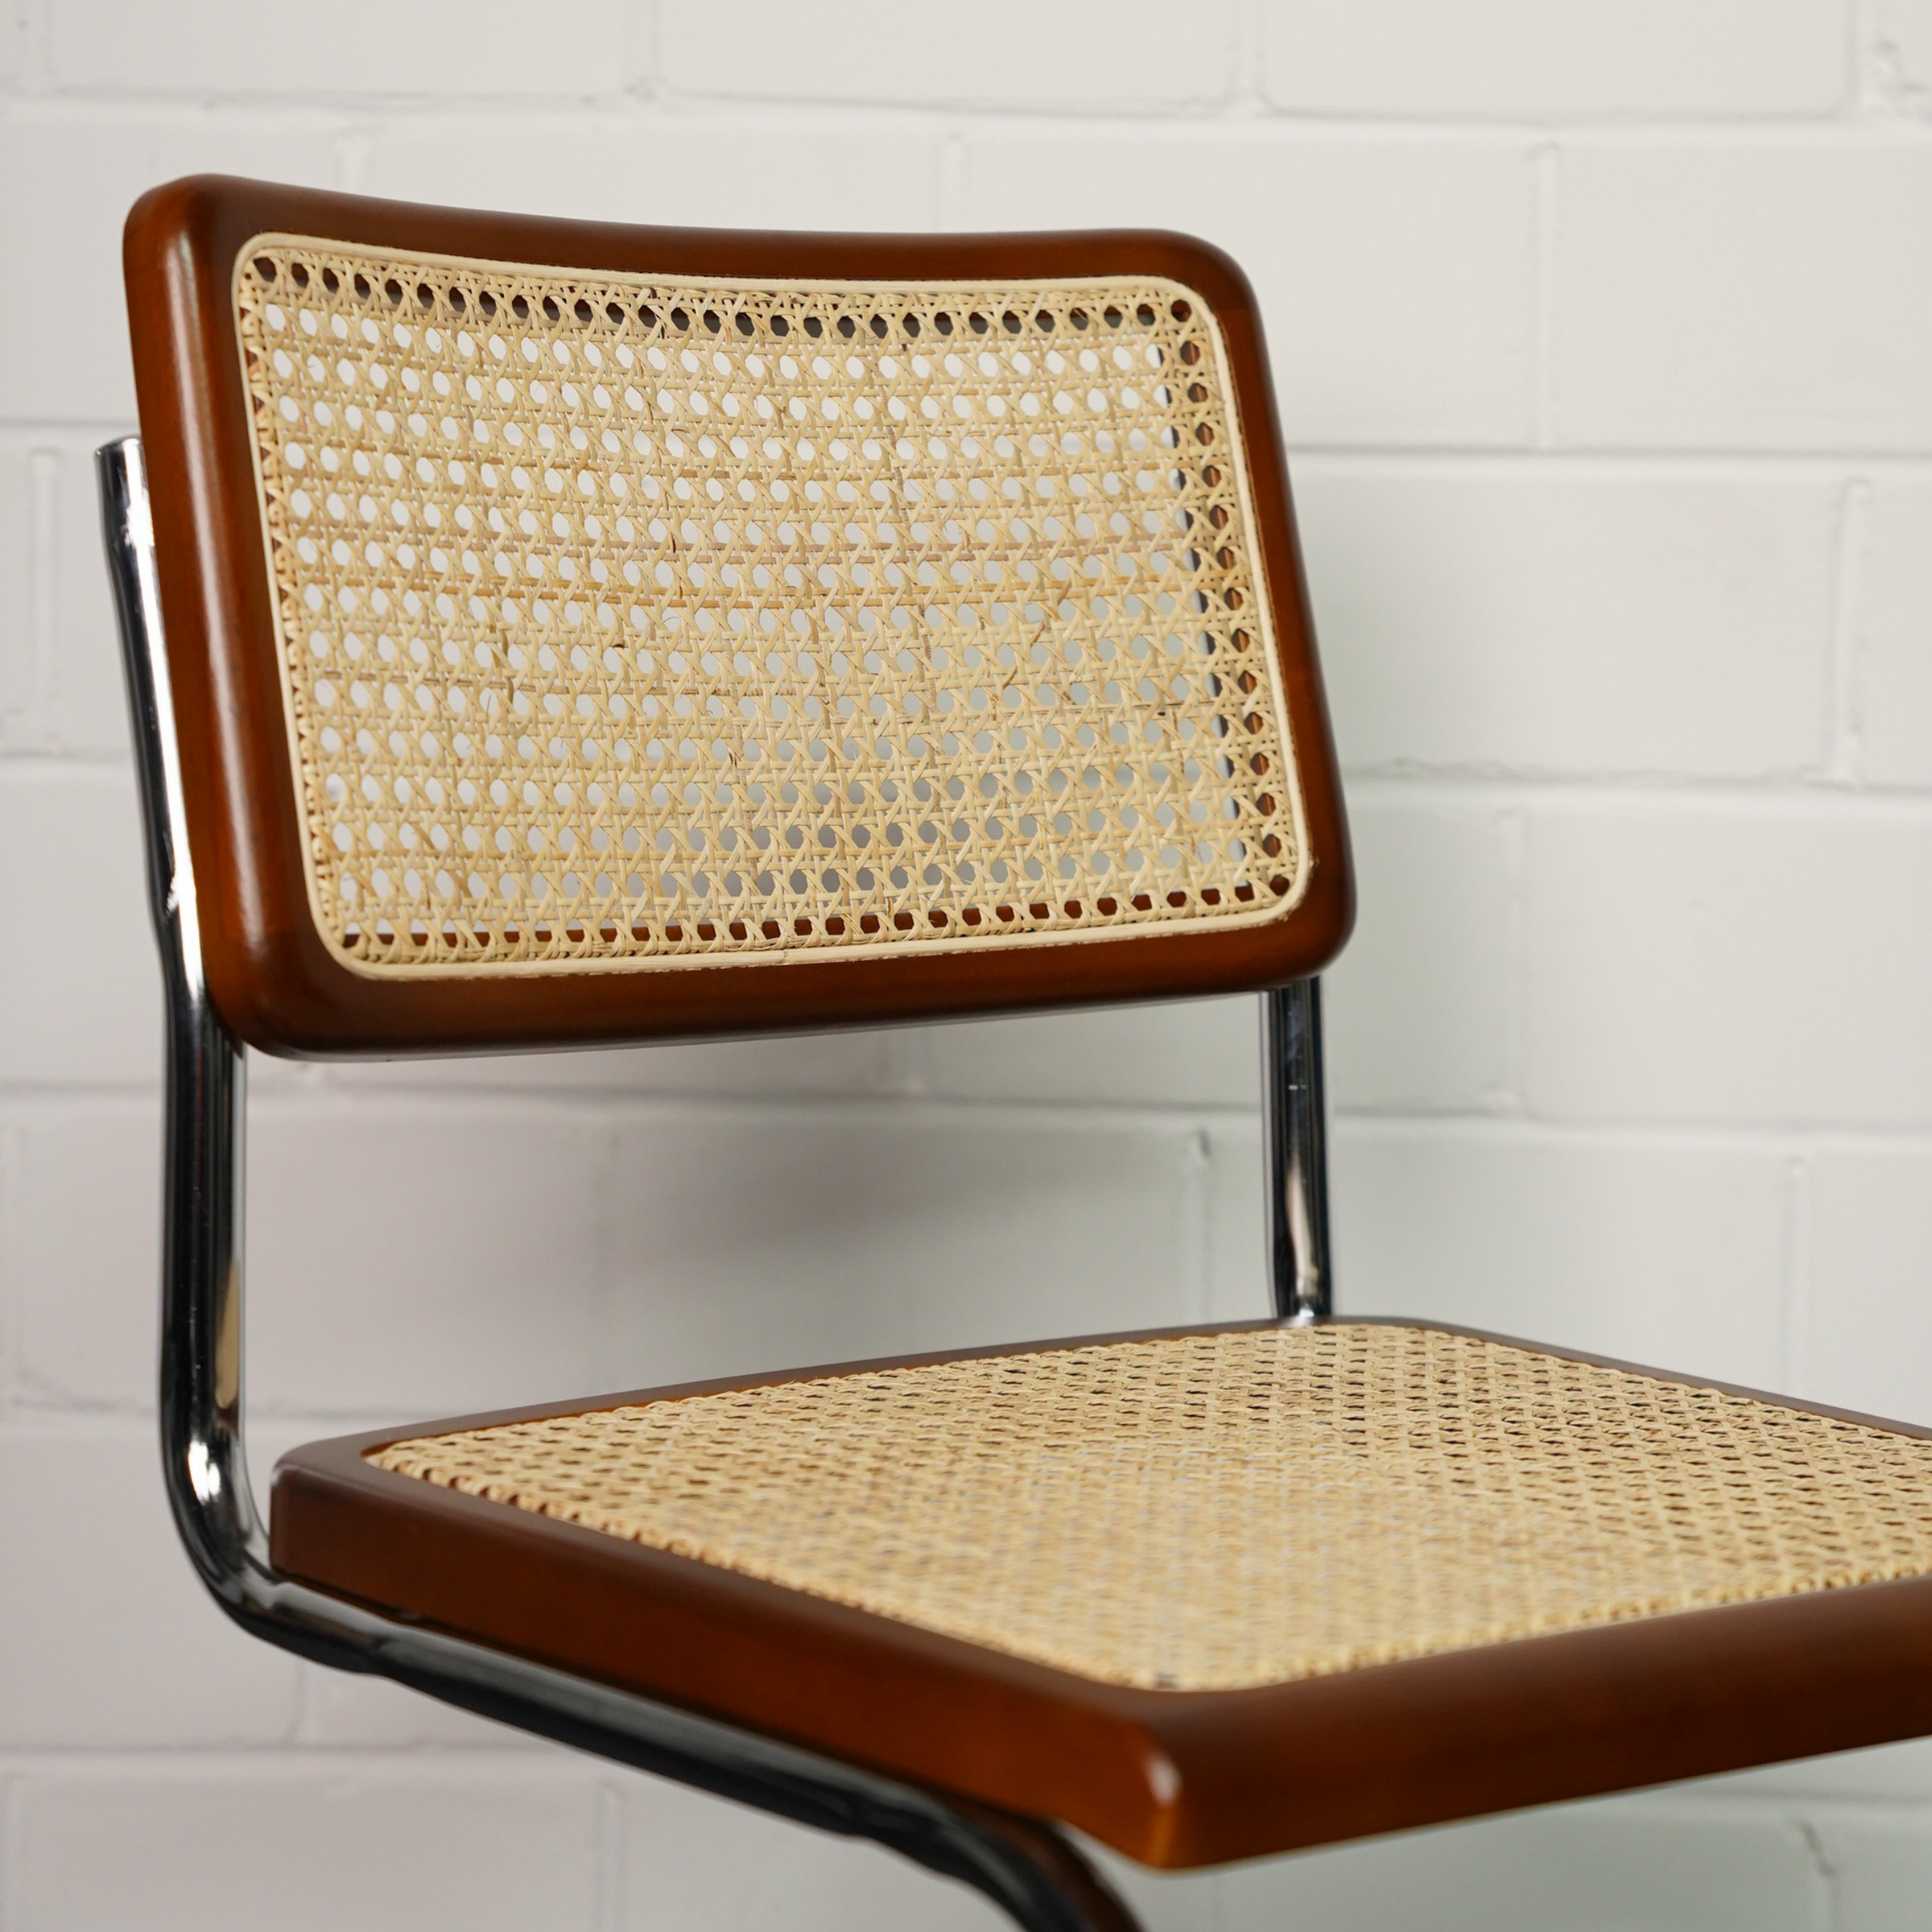 Marcel Breuer Cesca Replica Chair | Teak V2